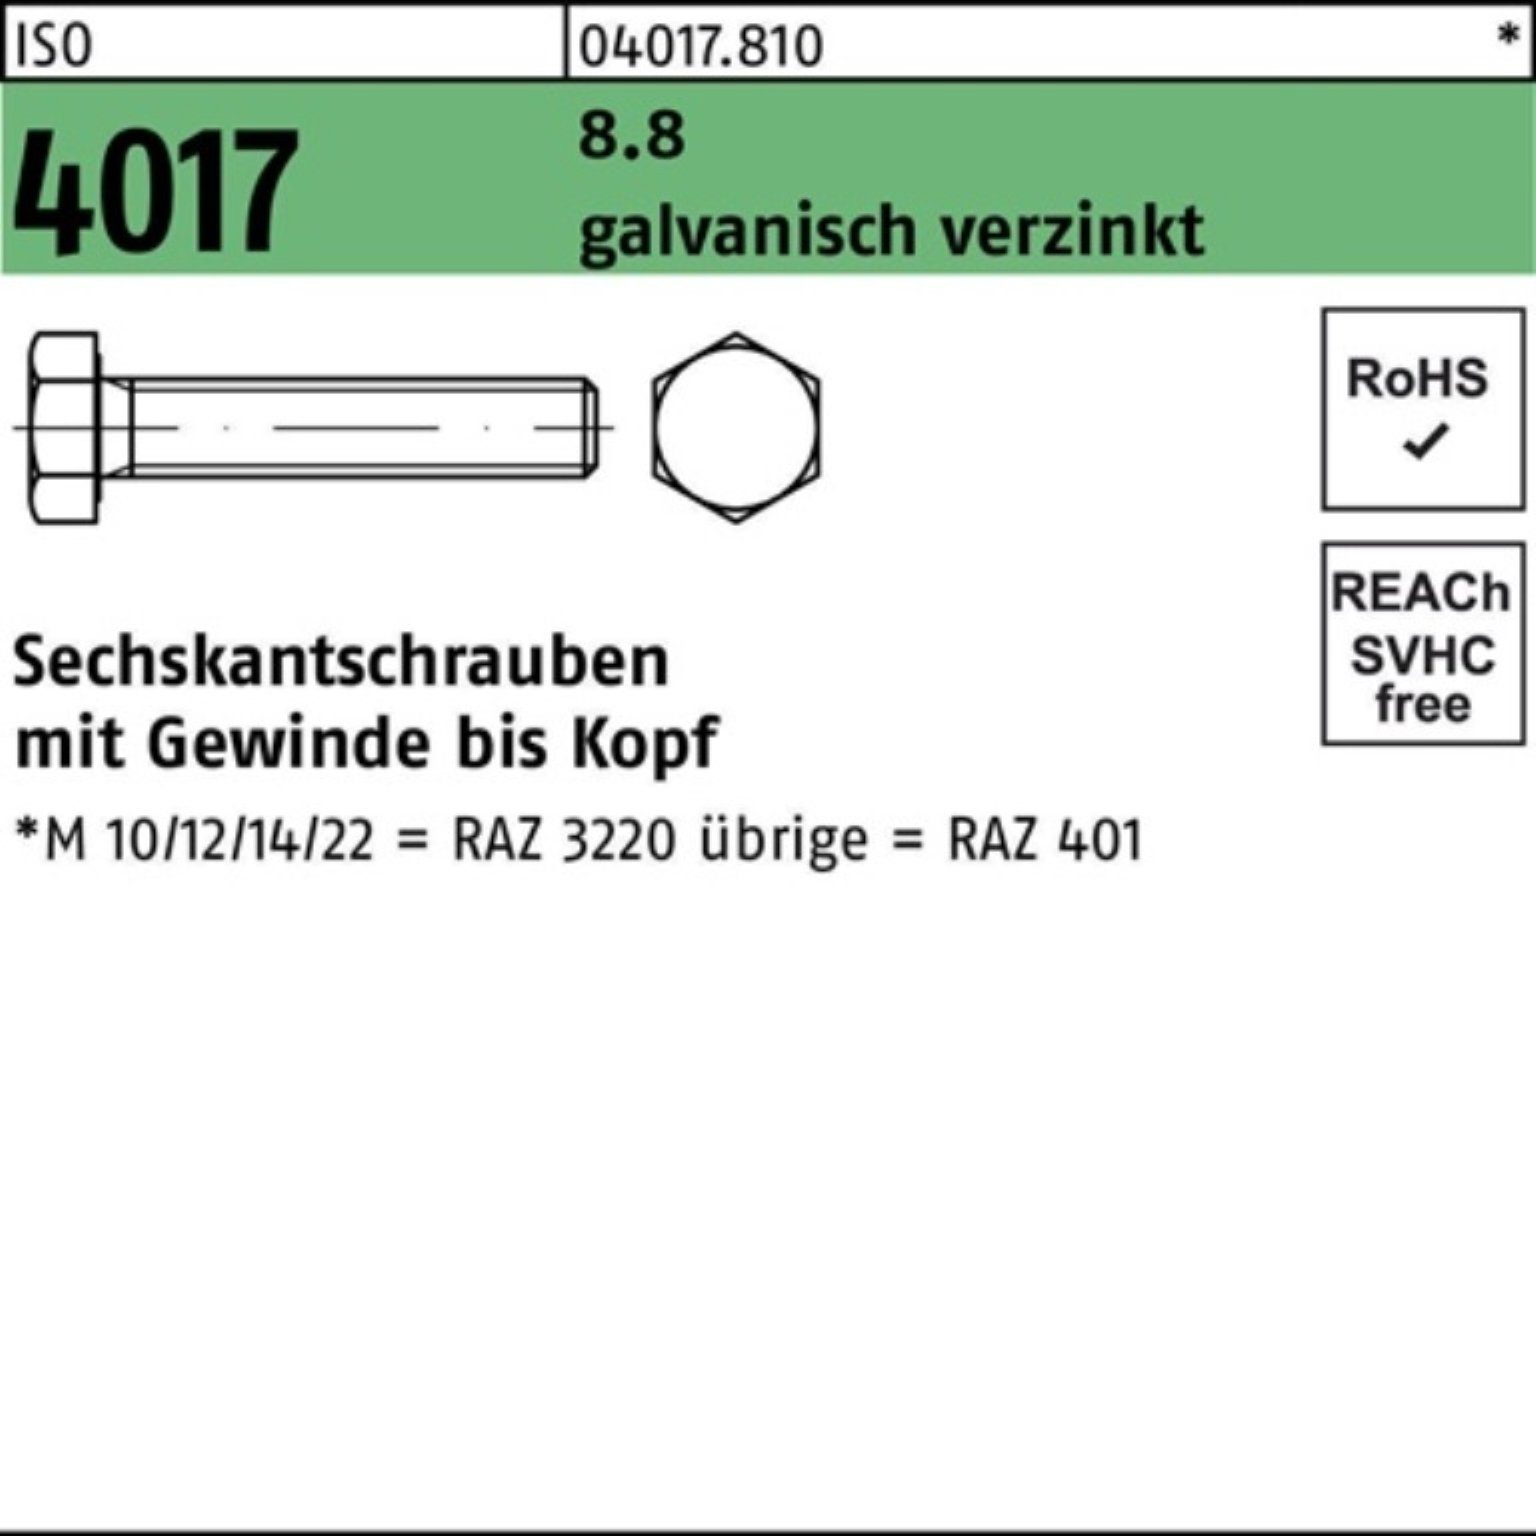 Pack 100er Sechskantschraube M24x 4017 60 25 VG St Bufab galv.verz. 8.8 Sechskantschraube ISO